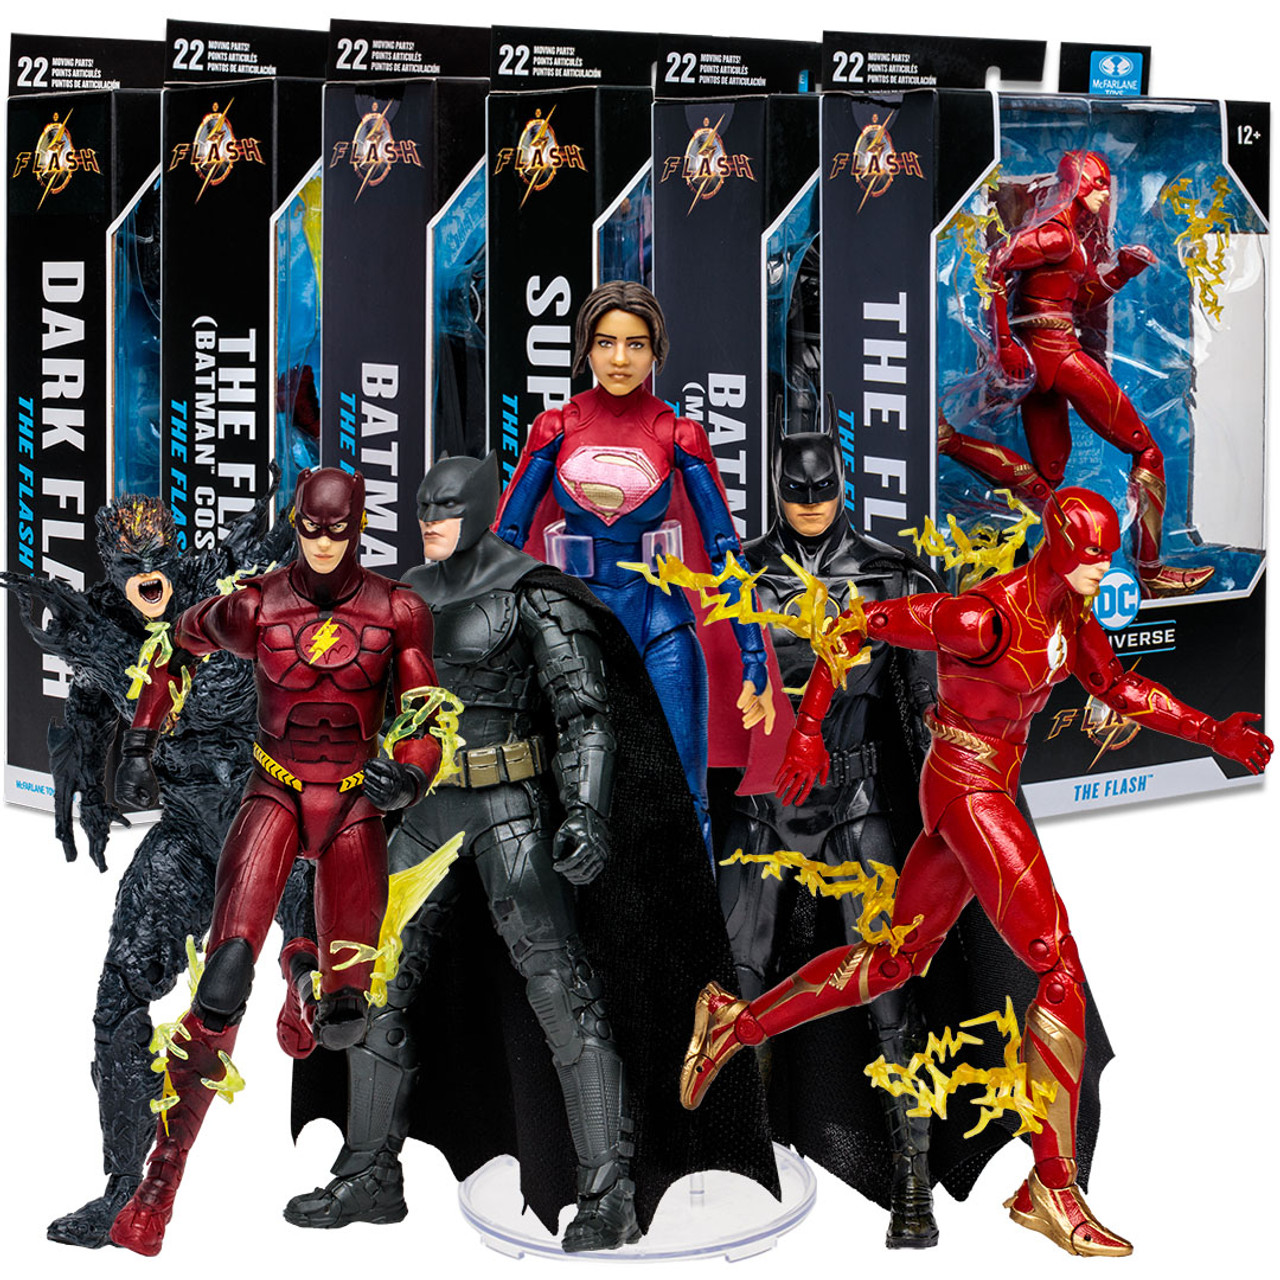 The Flash Movie Figures (6) - McFarlane Store